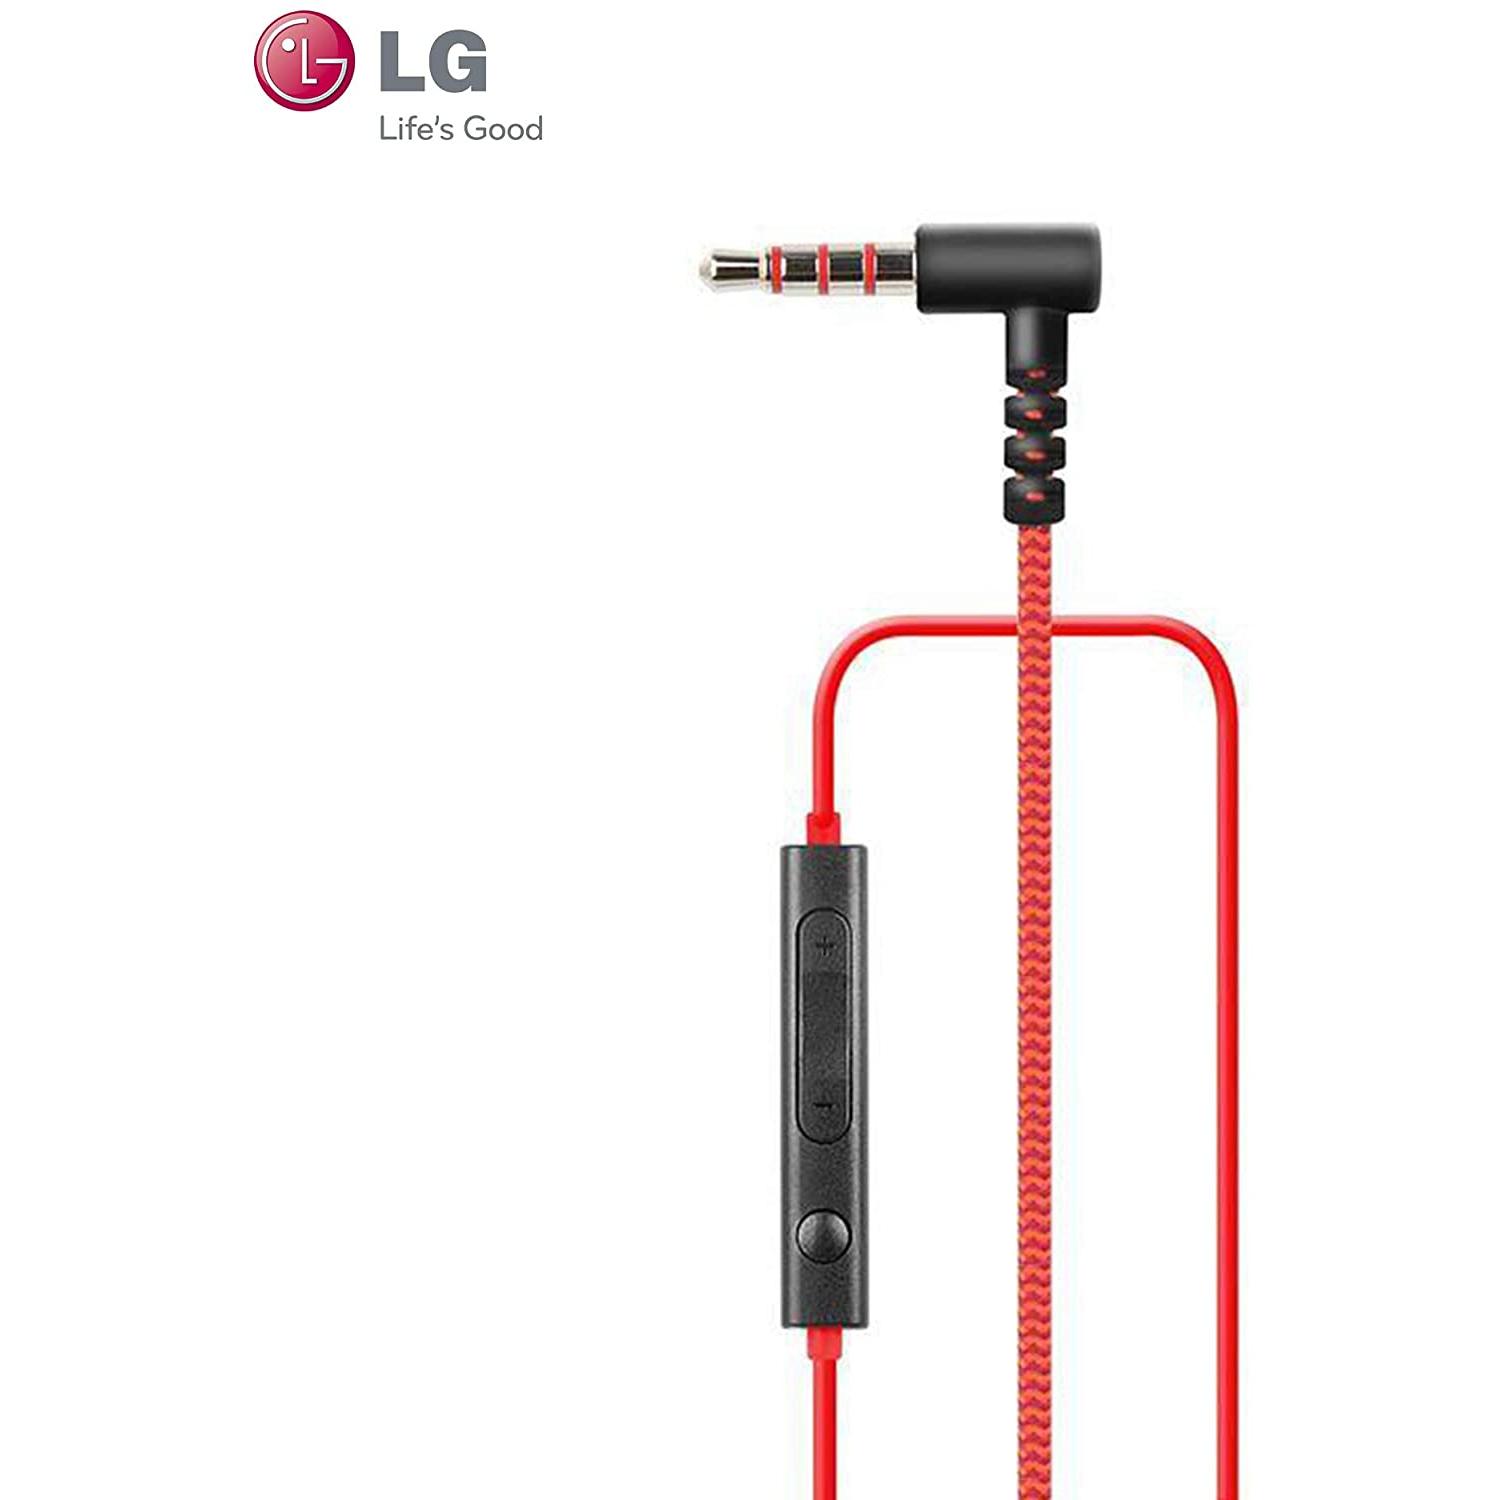 LG - Auriculares LG Quadbeat 3 LE630, color rojo, para LG G4, G3, G5, G6, D855, D830, G2, D802, 5X, K8